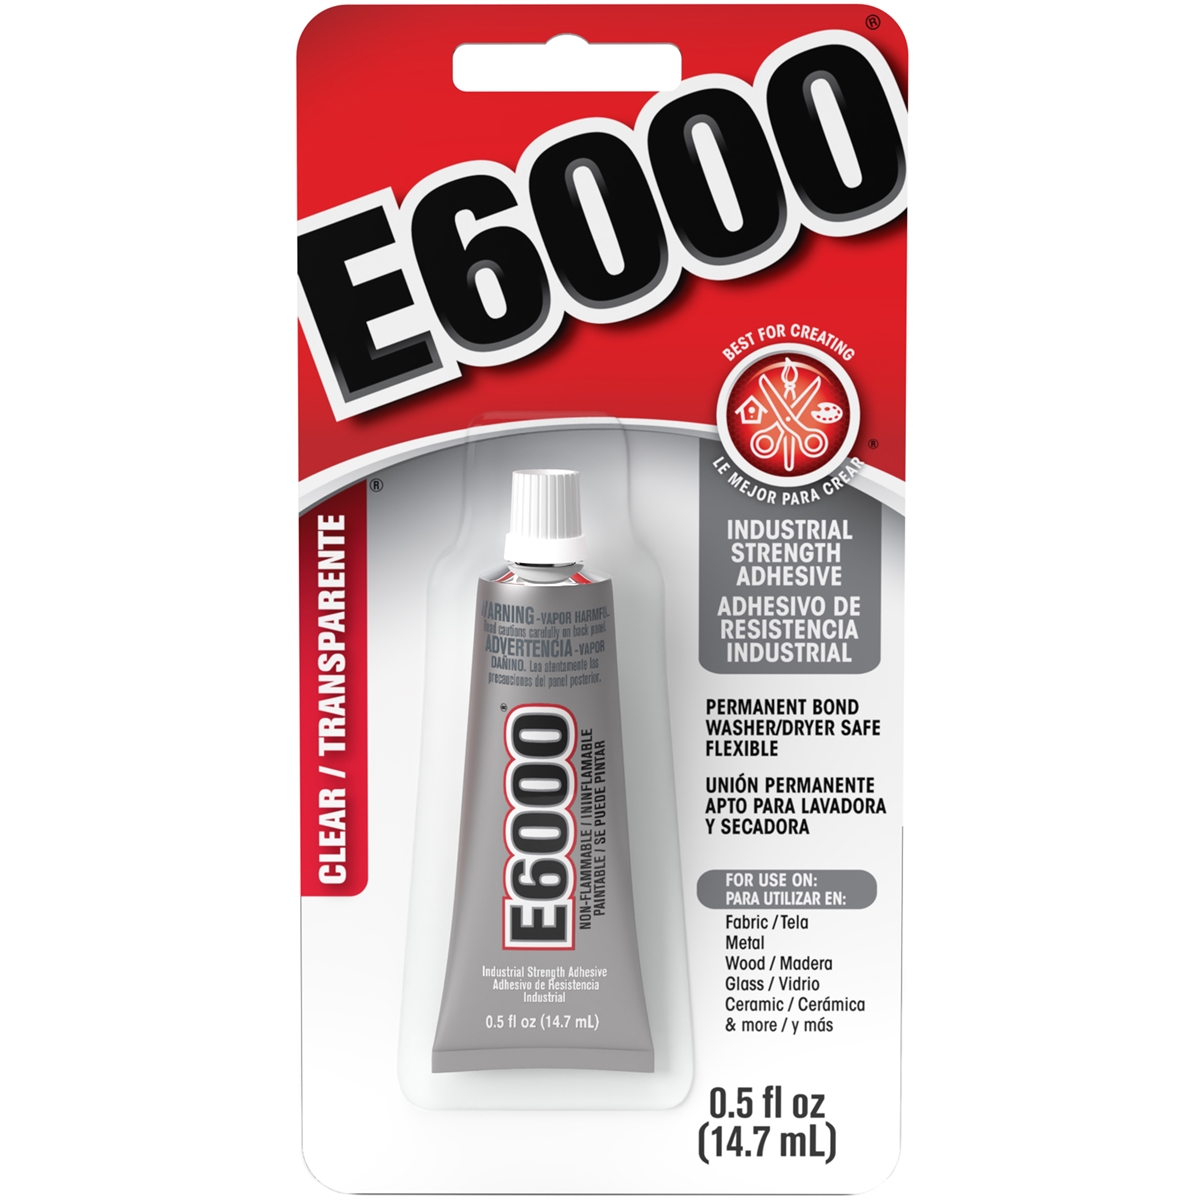 E-6000, jewelry glue, jewelry supplies, jewelry making, adhesive, multi  purpose glues, clear glue, crafters glue